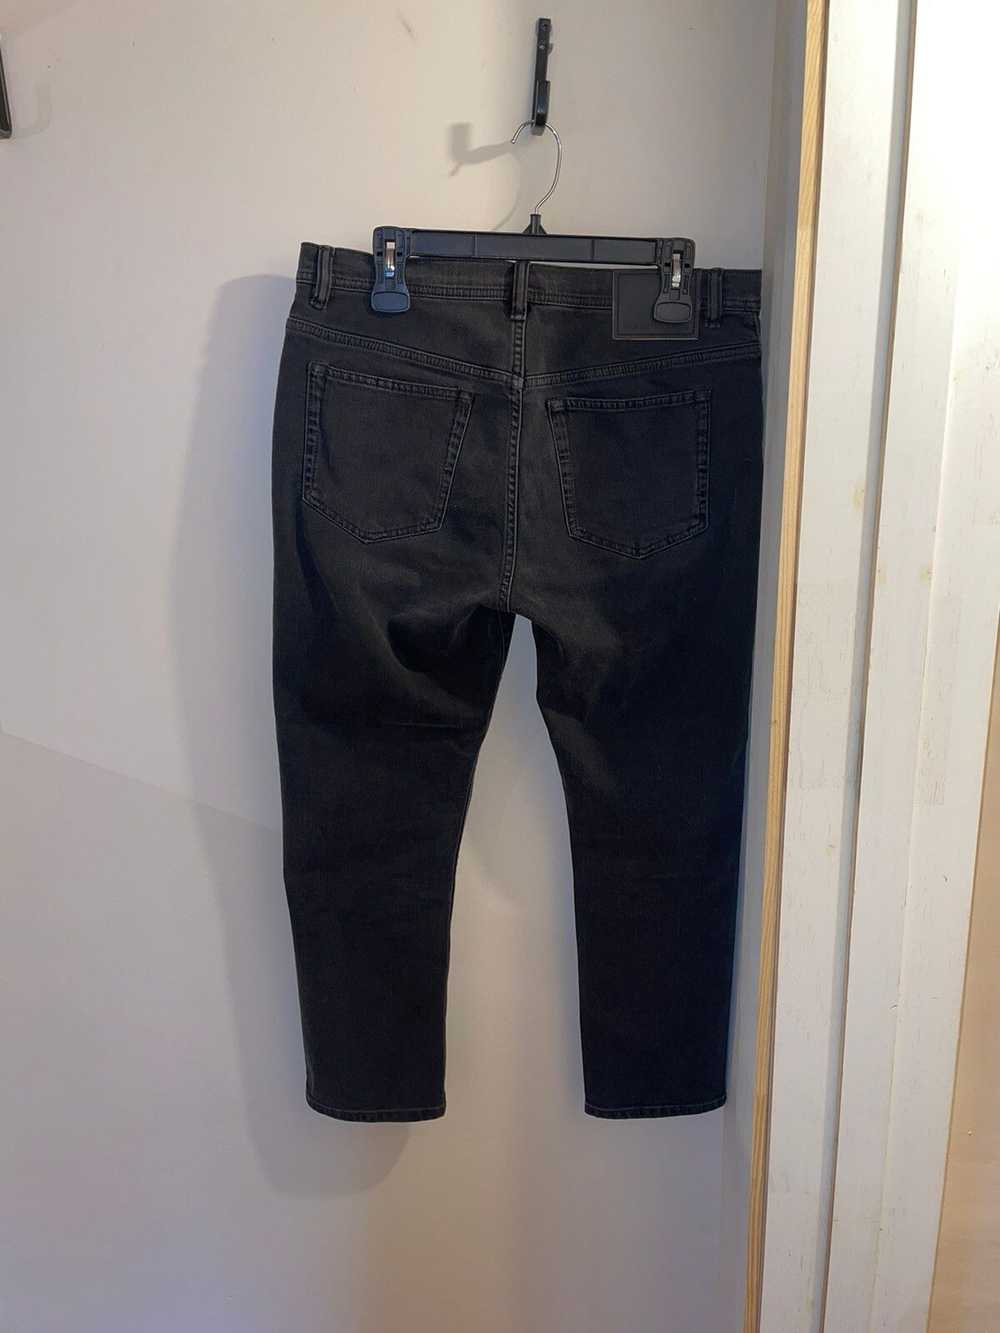 Acne Studios Slim Fit Jeans - River - image 2